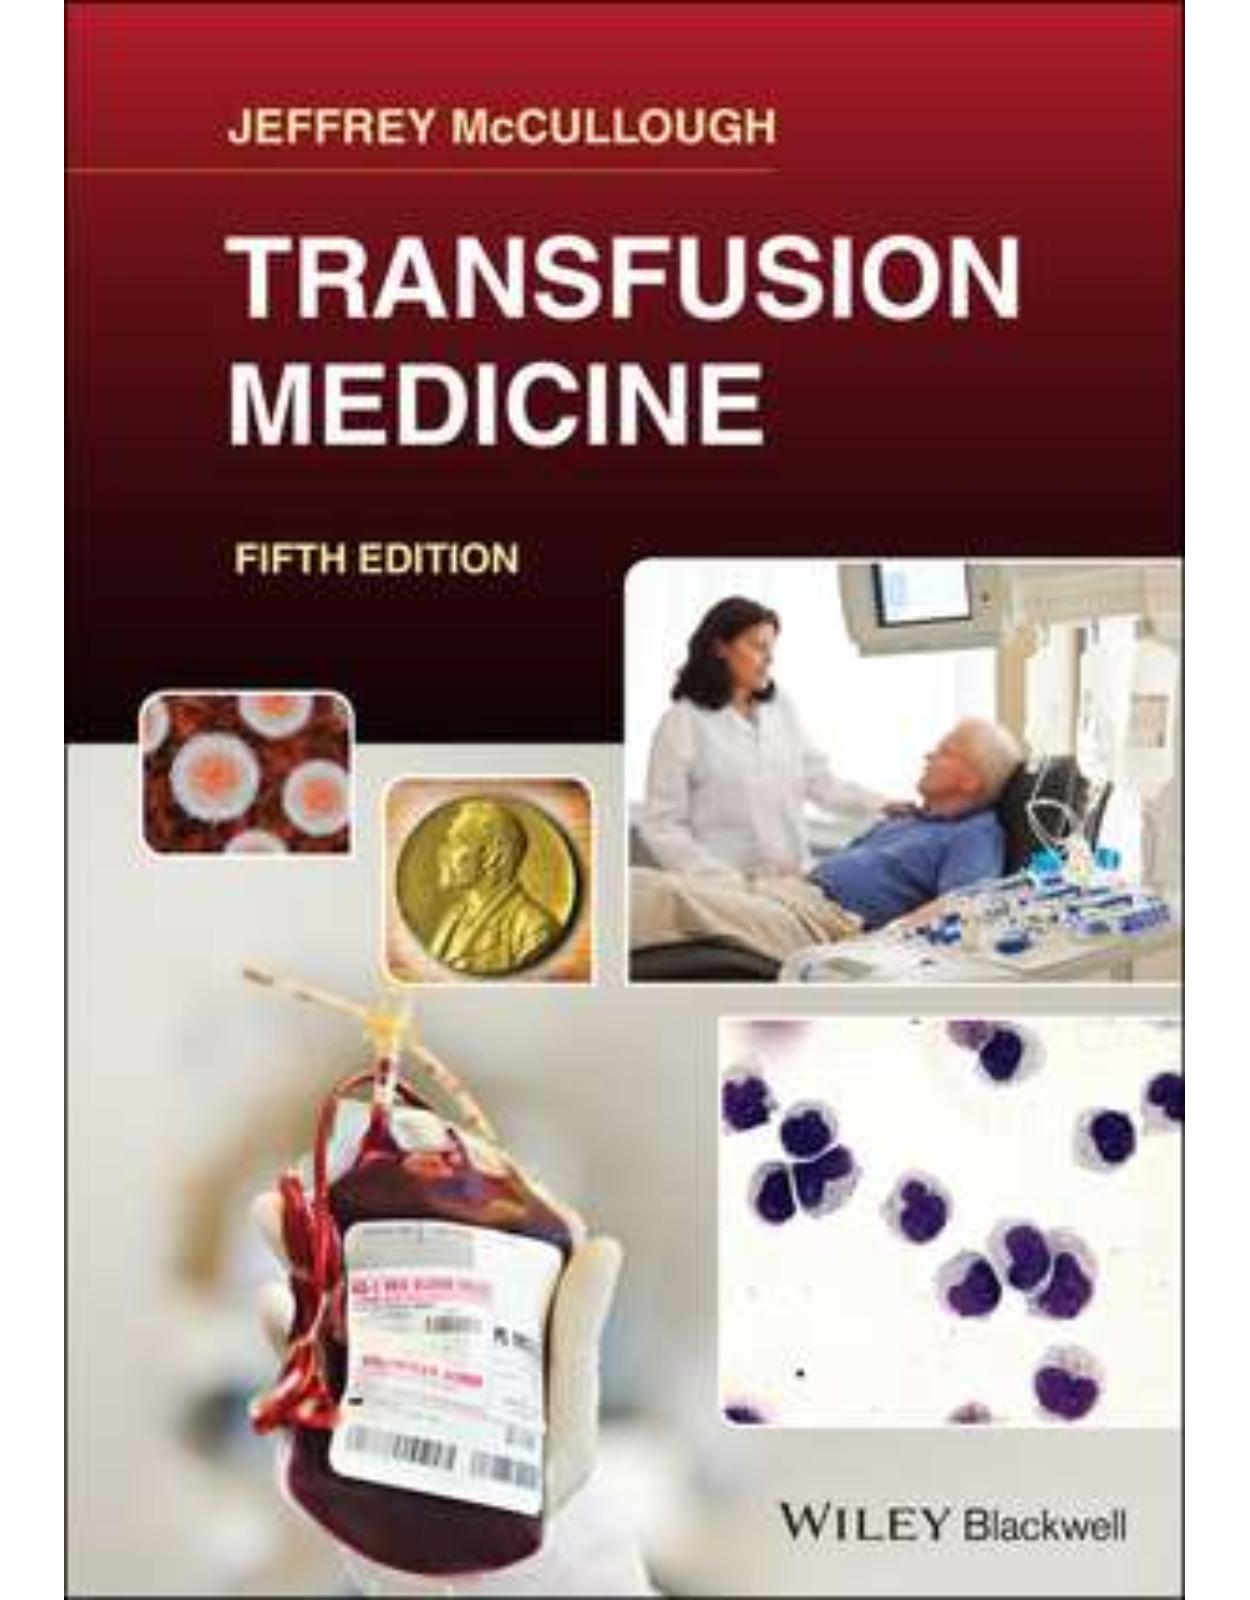 Transfusion Medicine, Fifth Edition